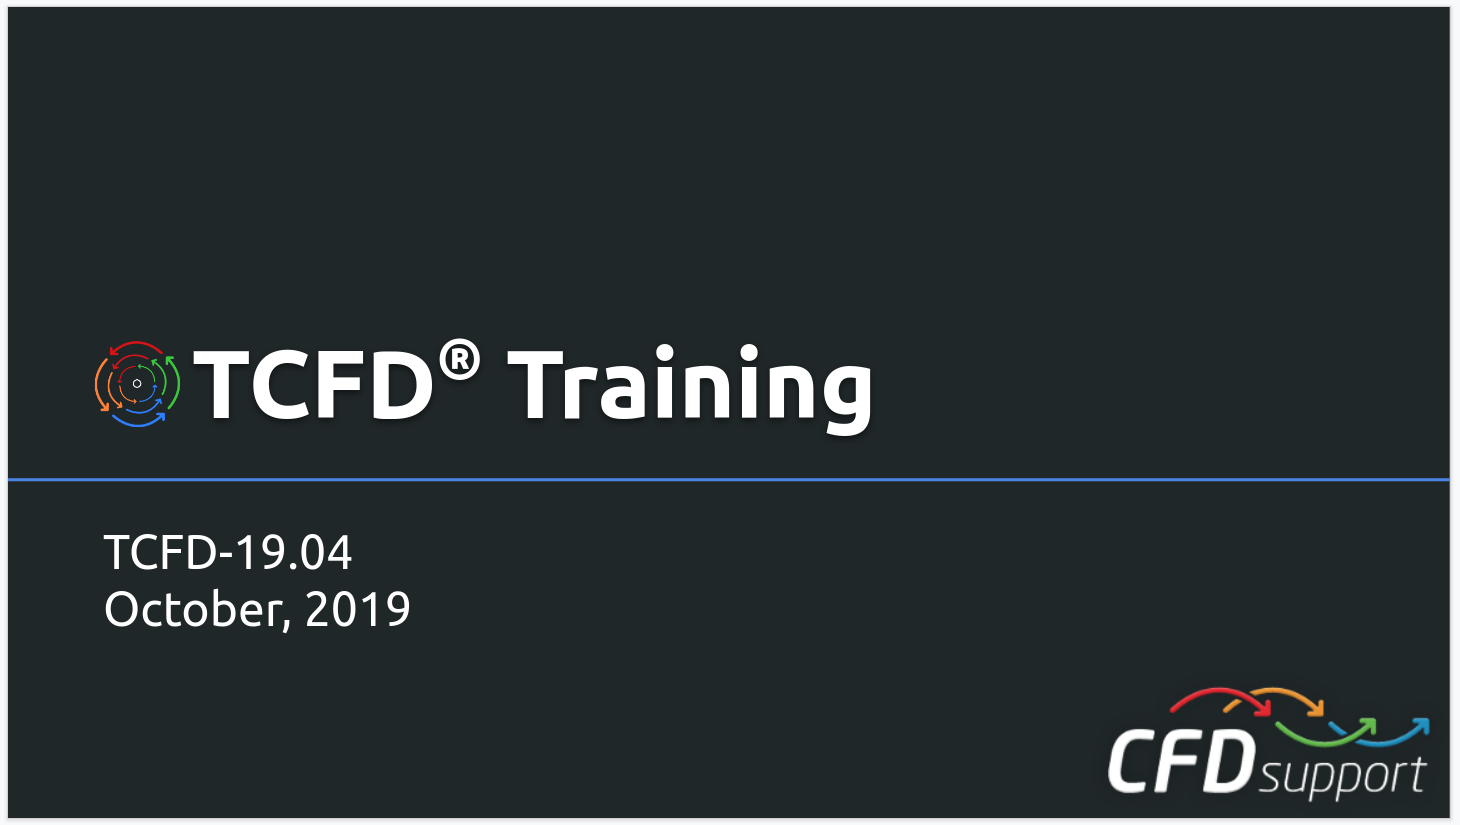 TCFD training